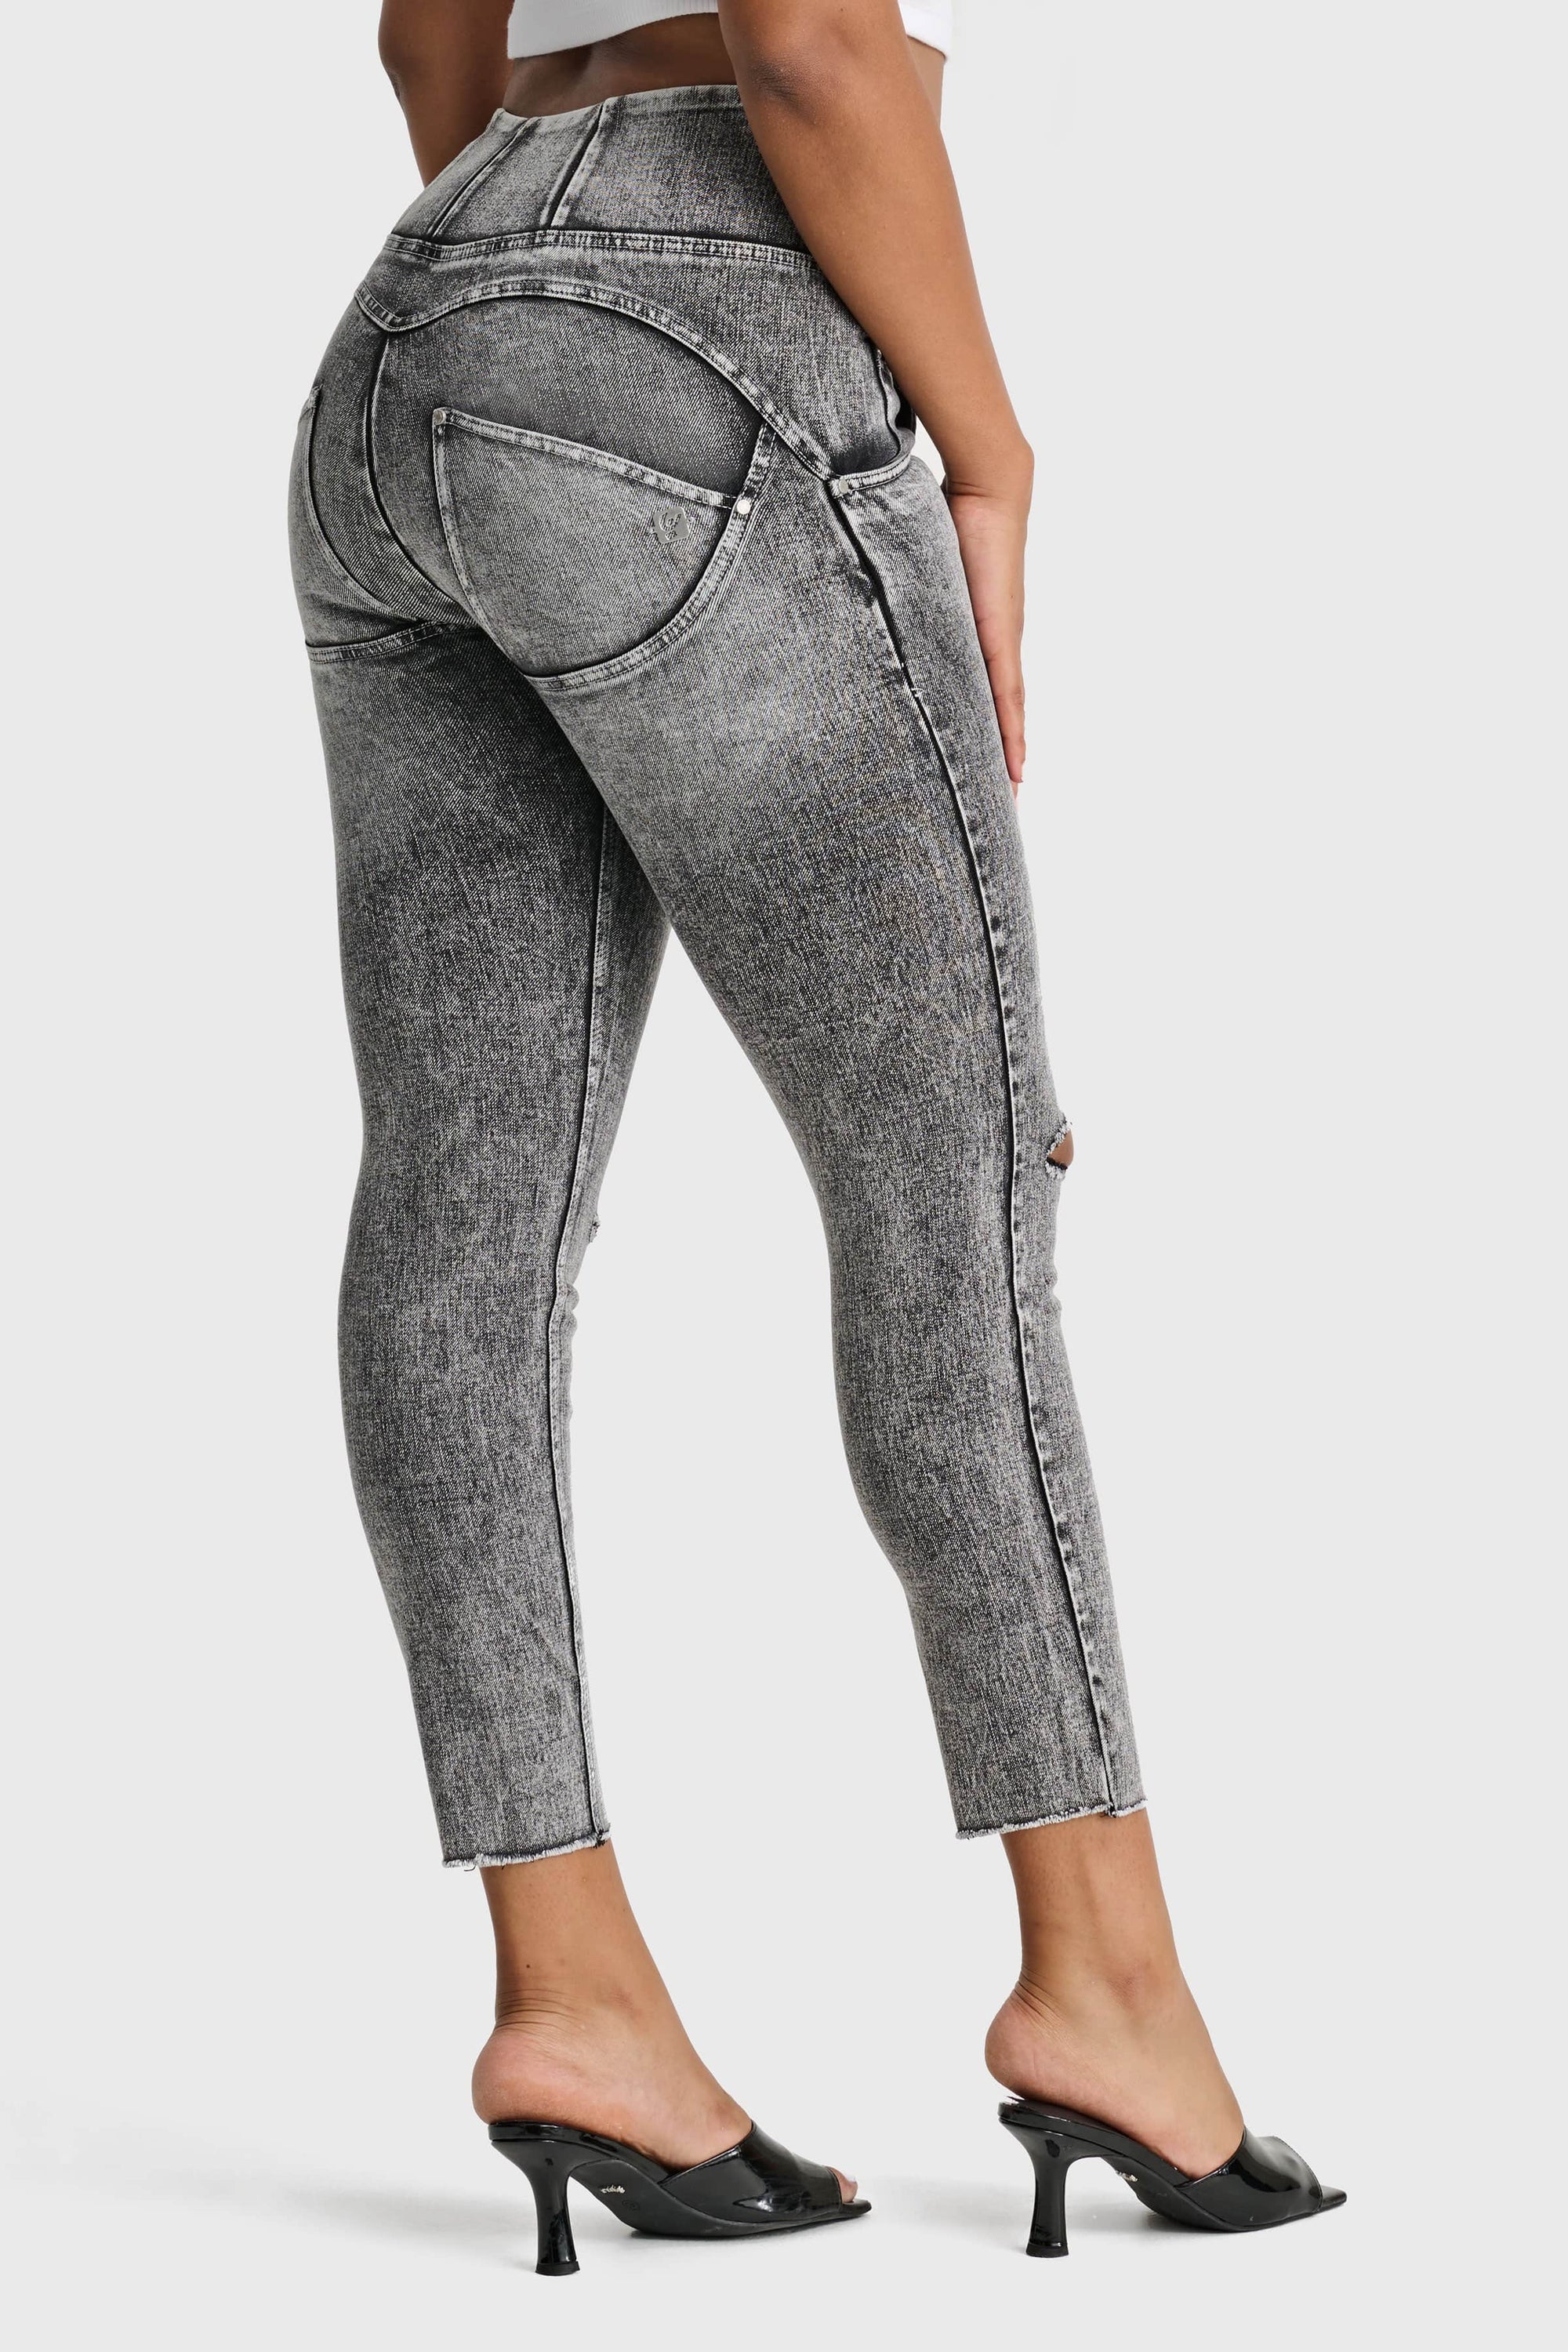 WR.UP® Snug Ripped Jeans - High Waisted - 7/8 Length - Grey Stonewash + Grey Stitching 2